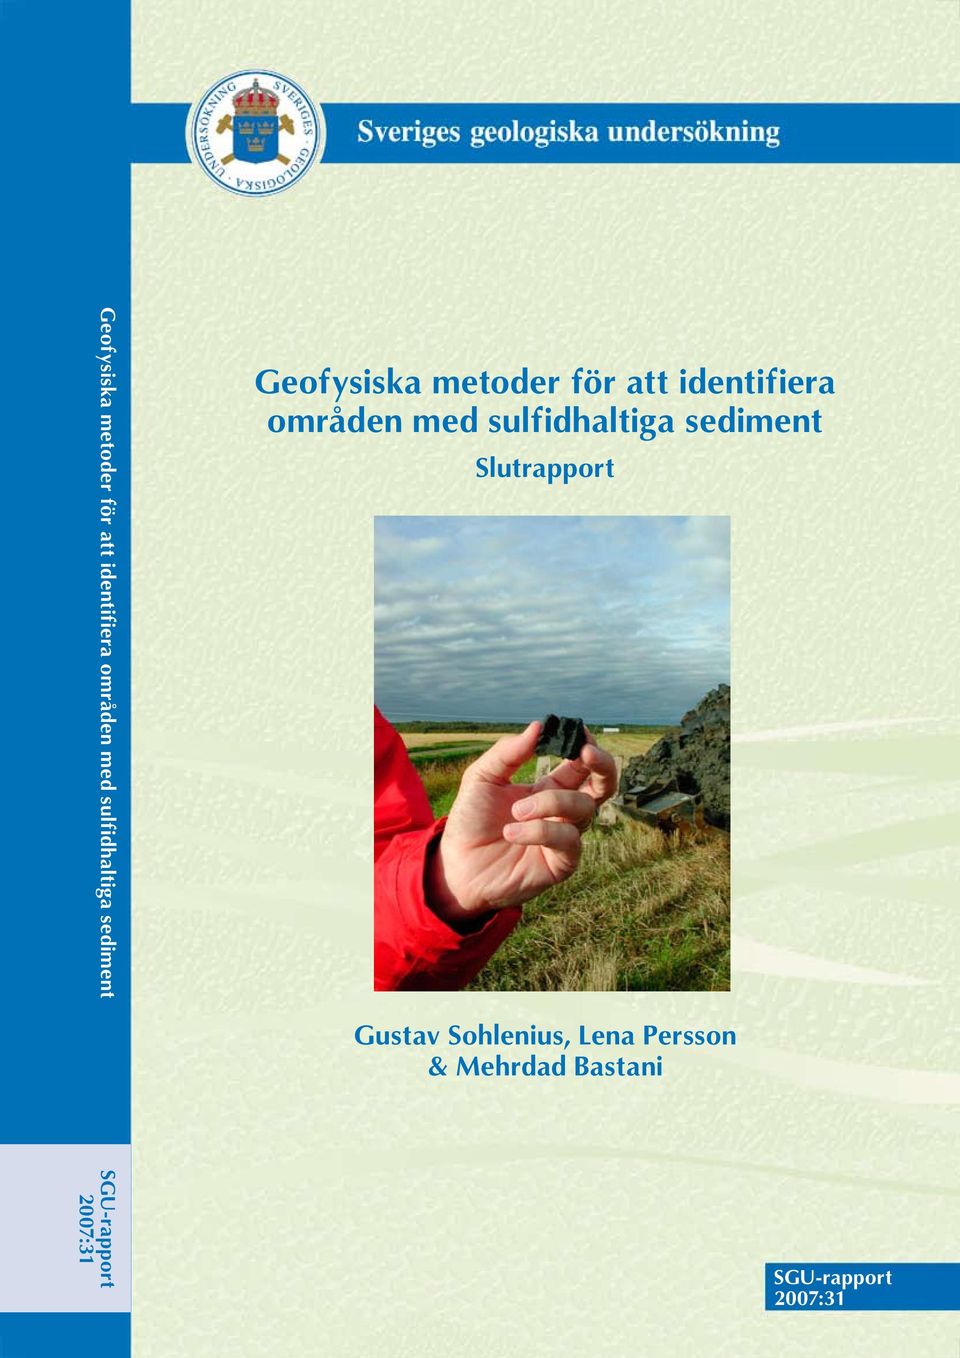 sediment Slutrapport Gustav Sohlenius, Lena Persson & Mehrdad